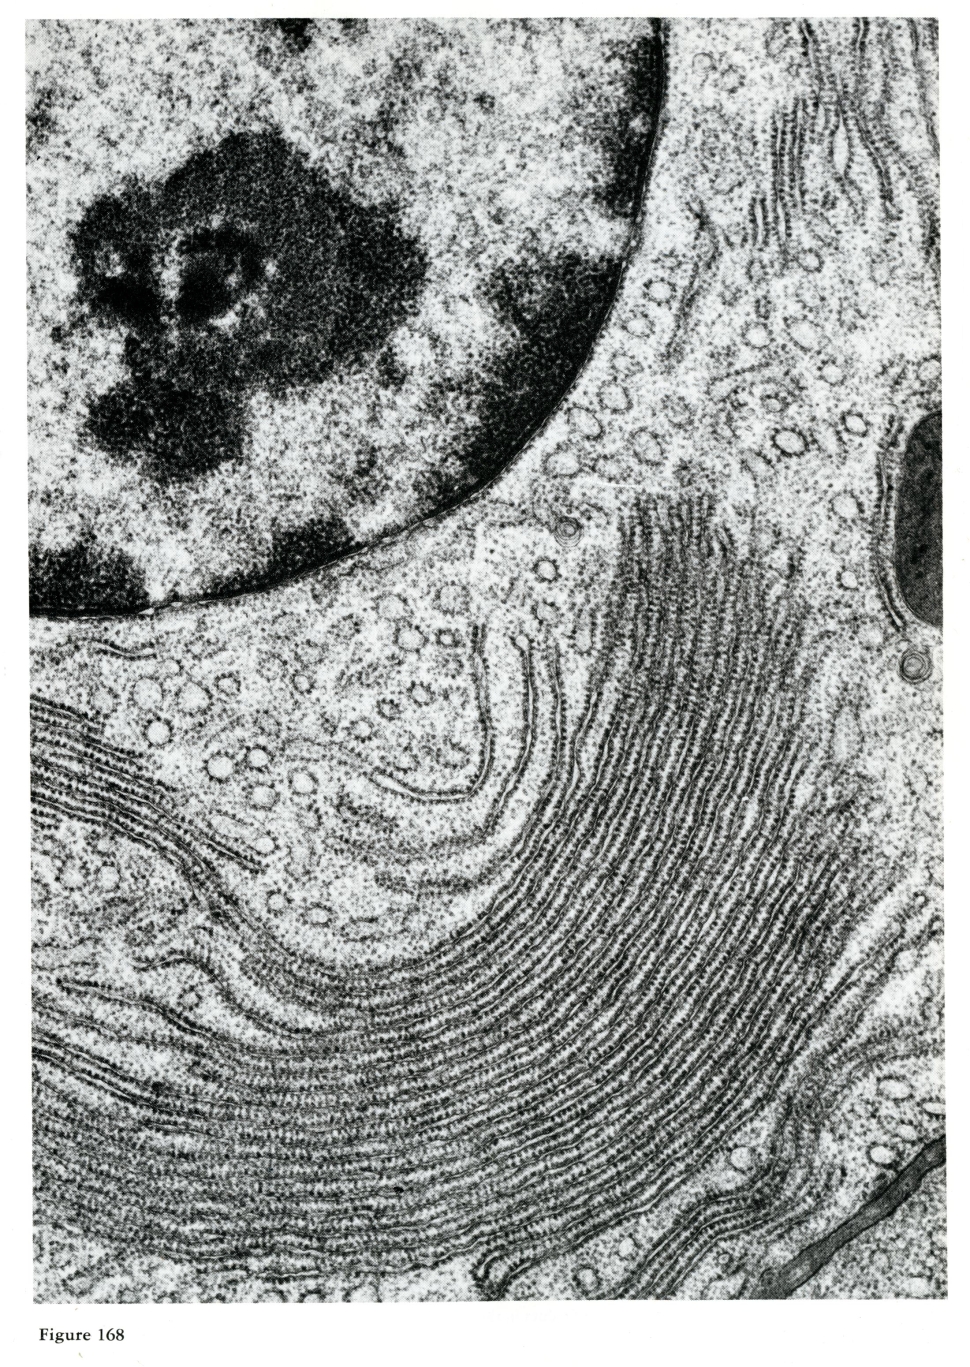 A highly magnified view of the endoplasmic reticulum via EM